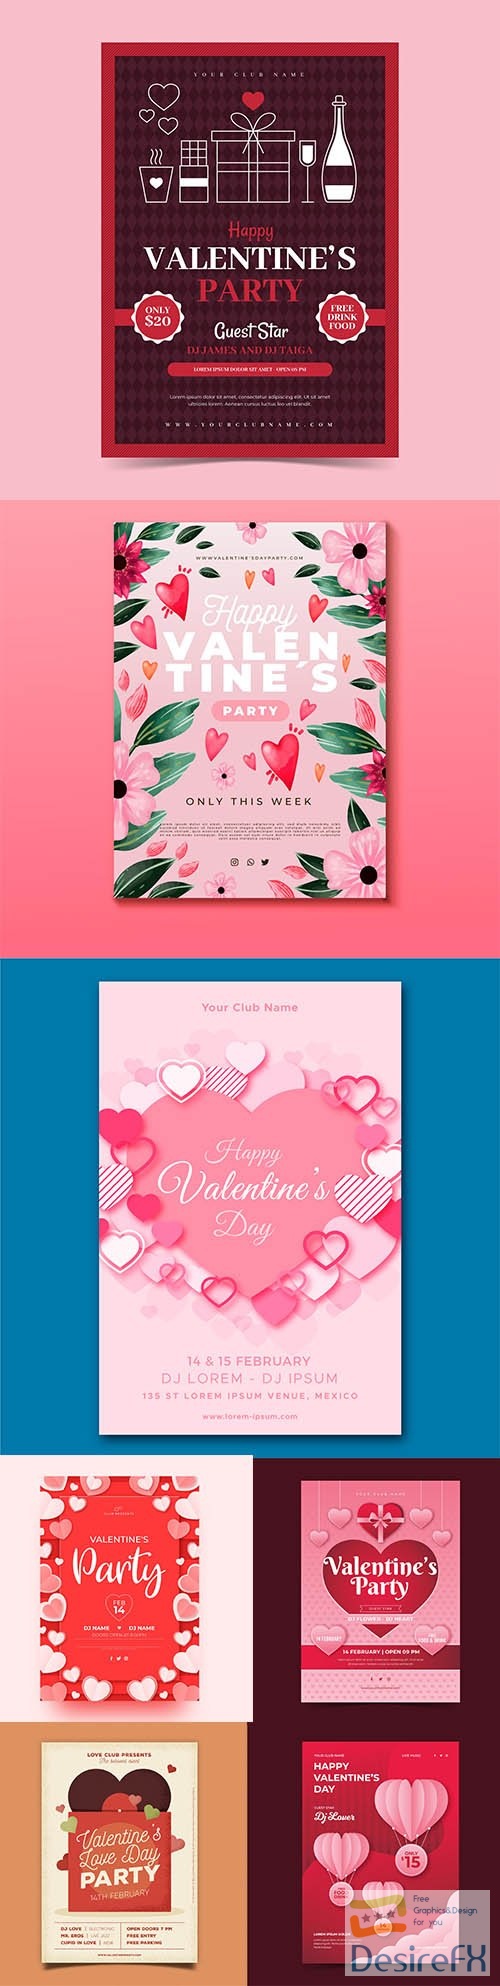 Happy Valentines day vector collection vol 6